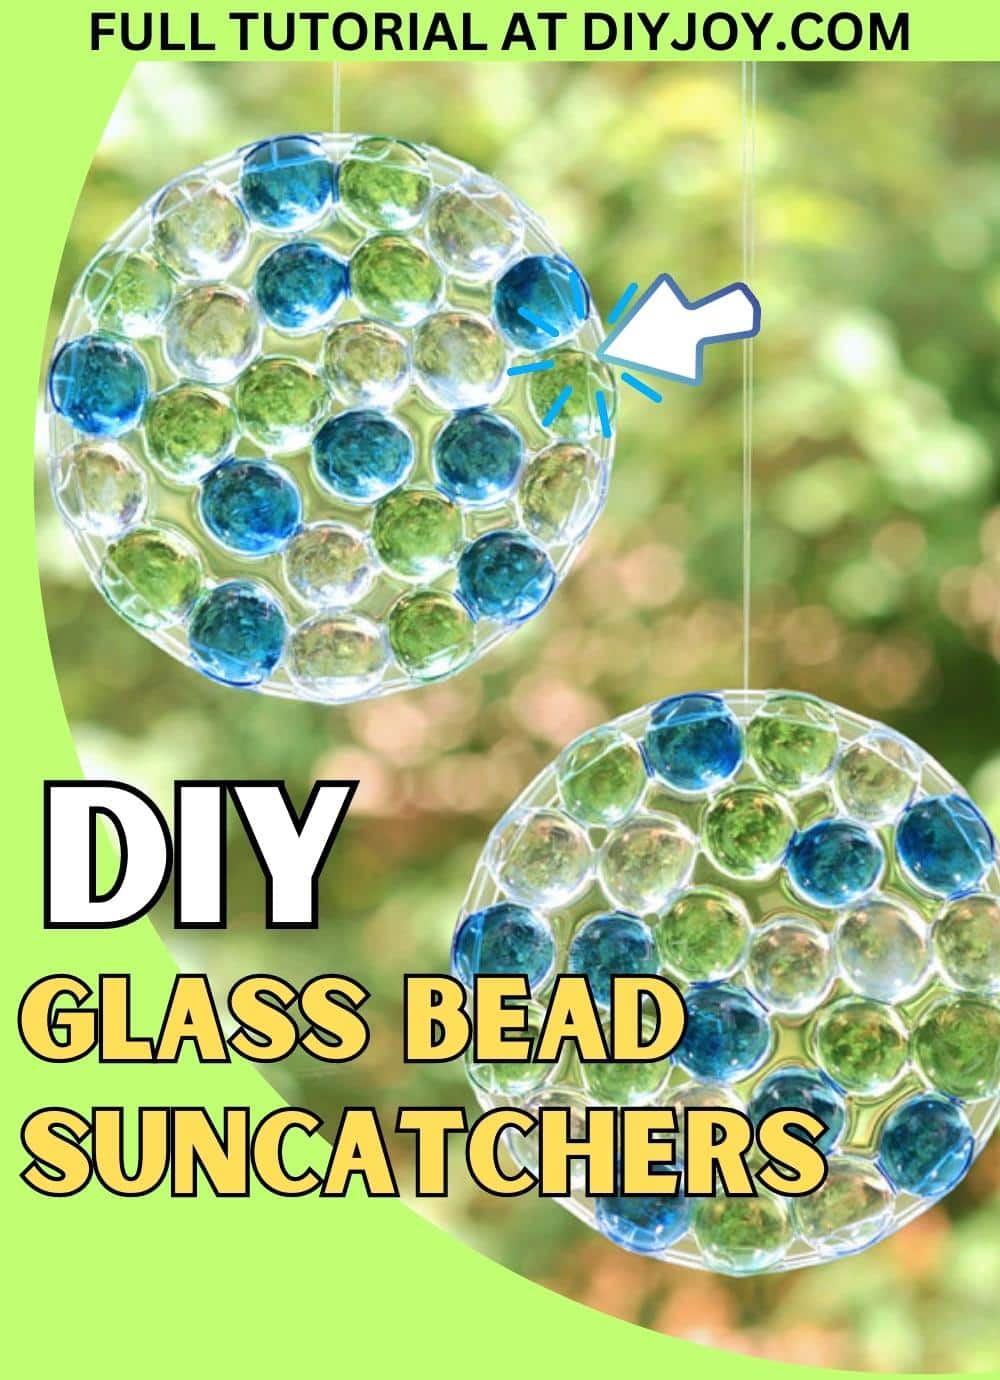 DIY Glass Bead Suncatcher Tutorial